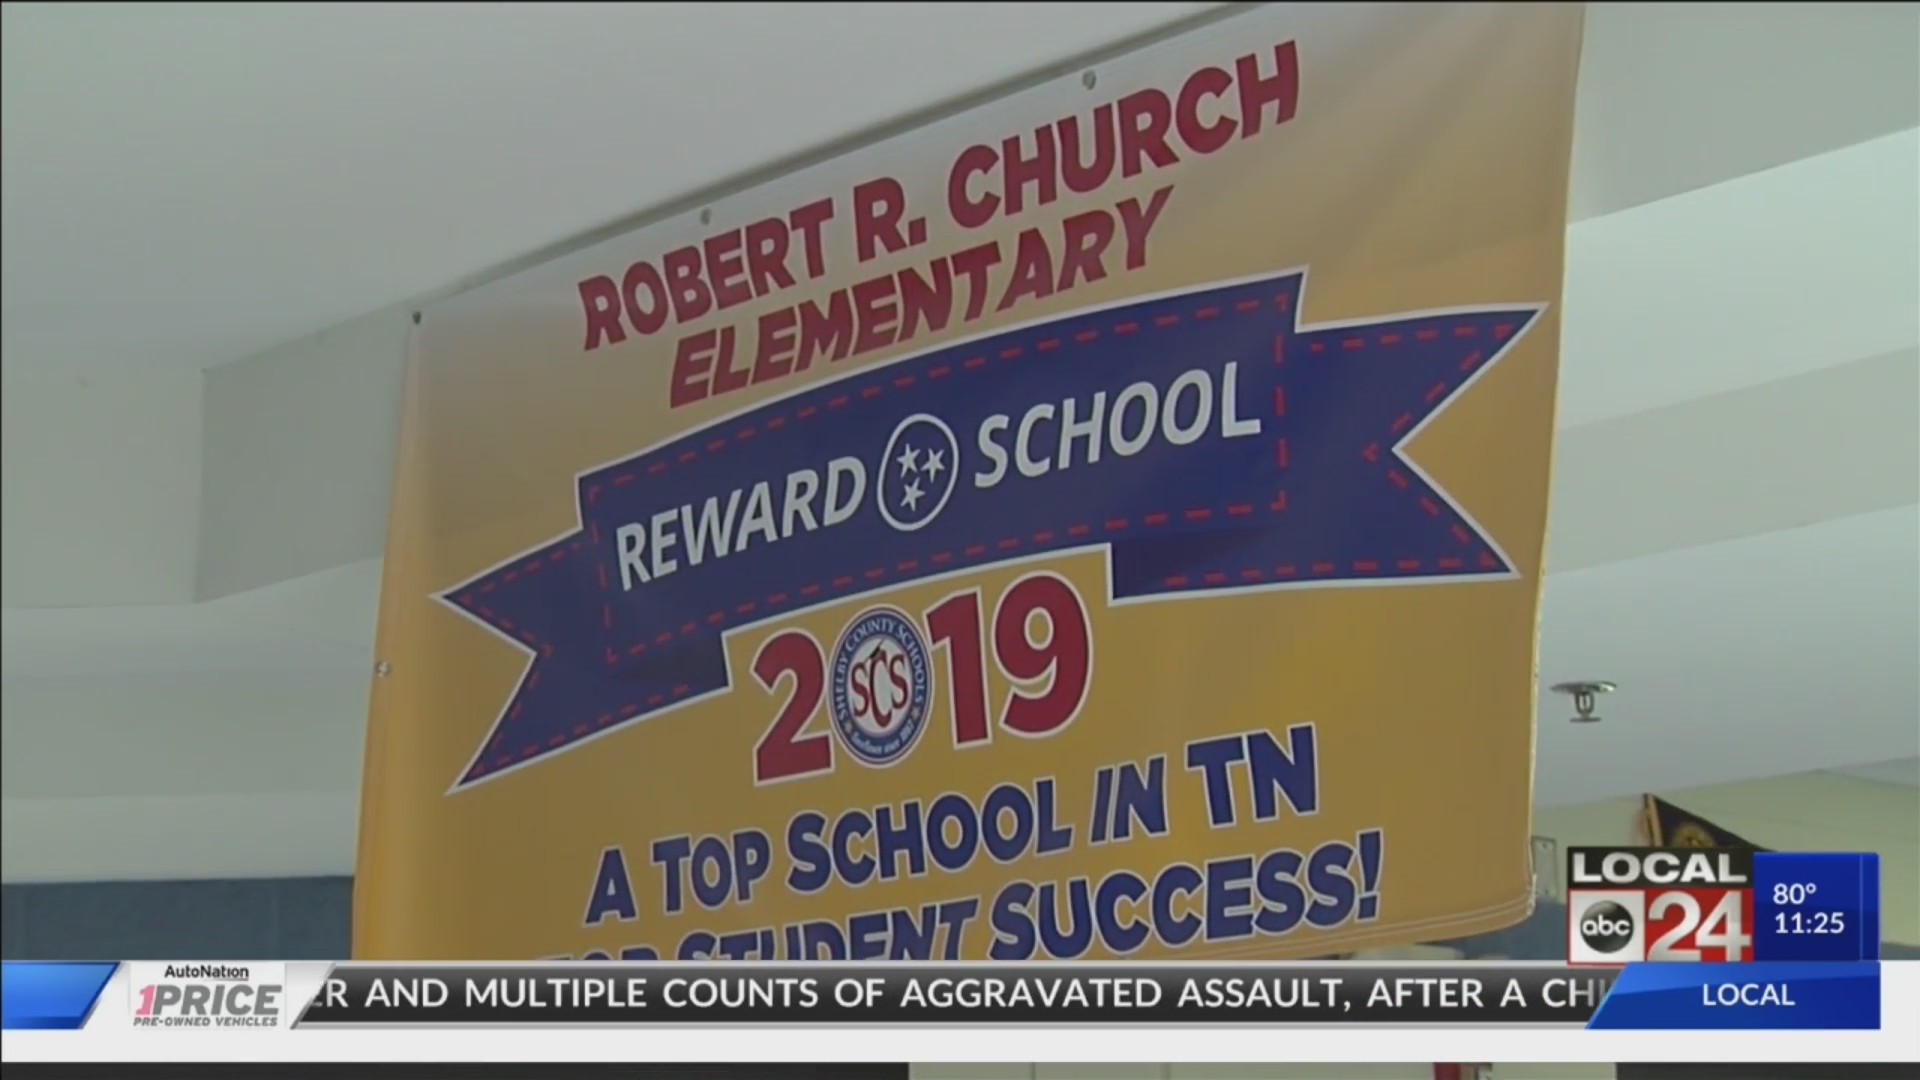 Local Cool School: Robert R. Church Elementary